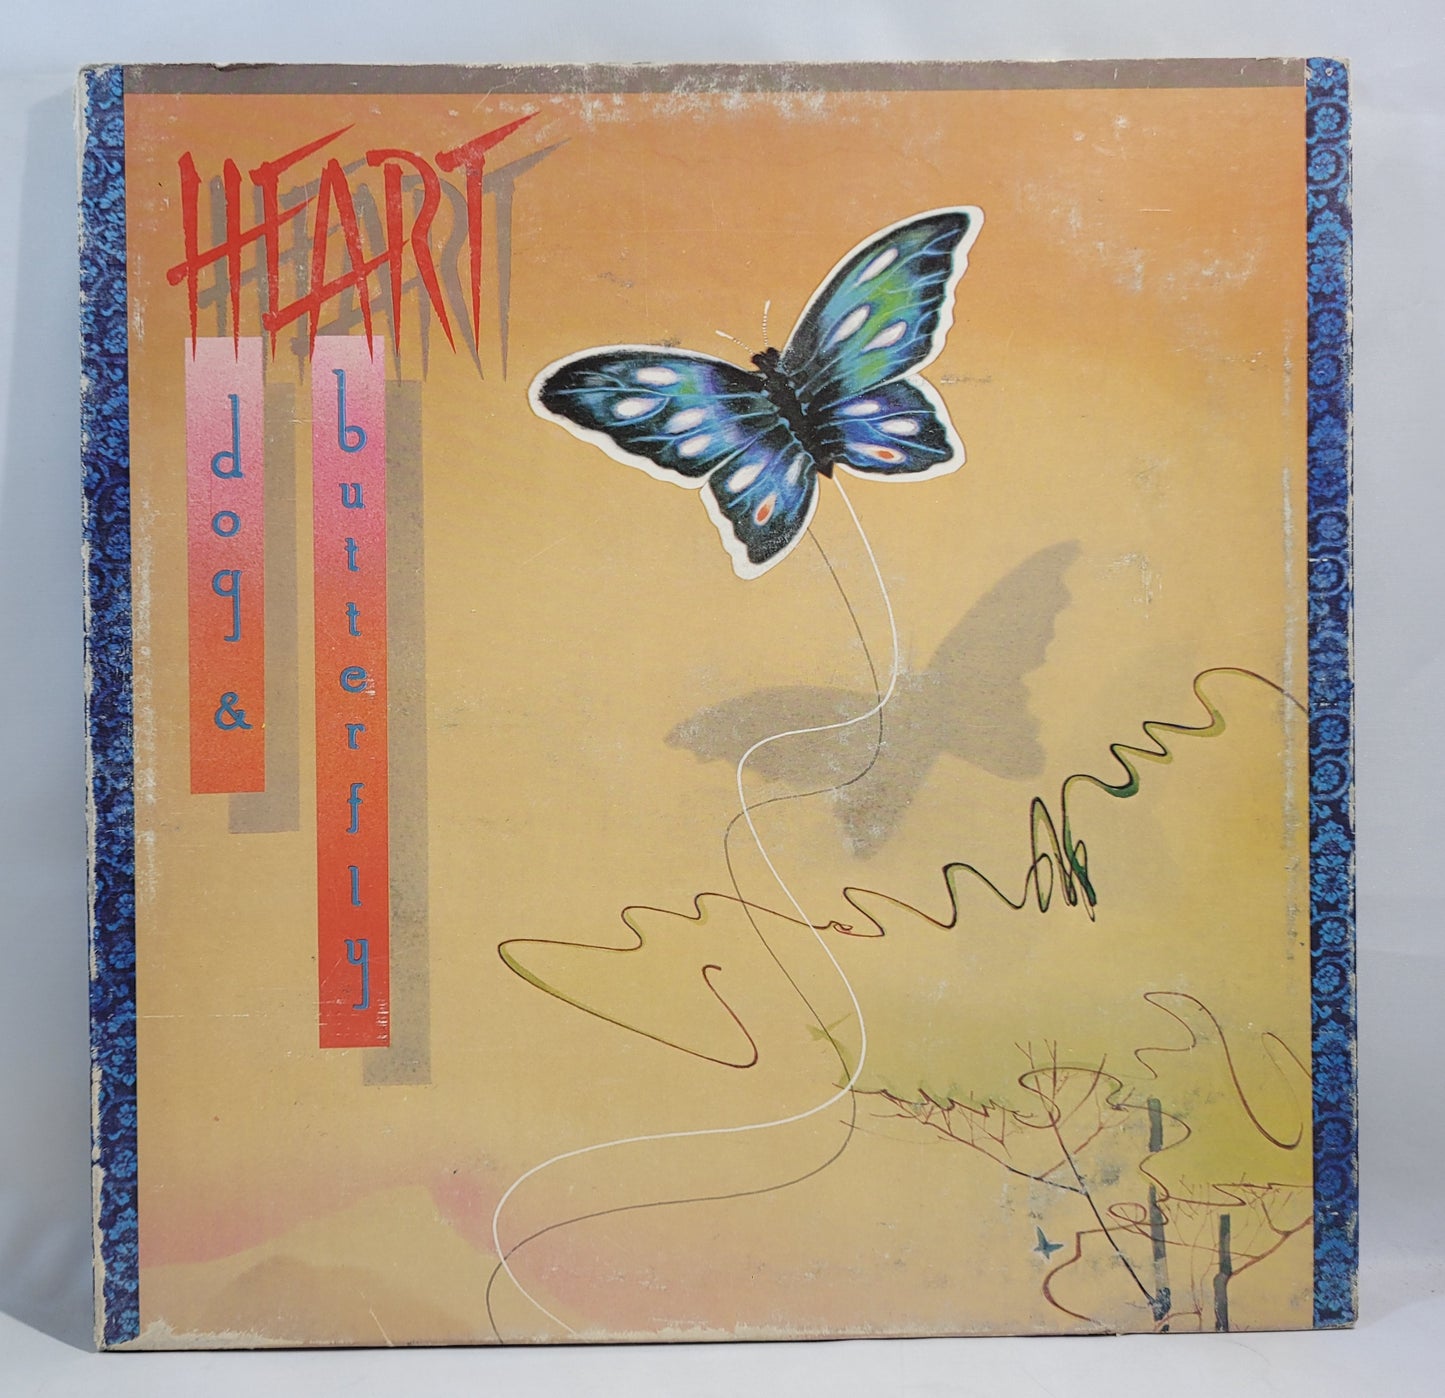 Heart - Dog & Butterfly [Vinyl Record LP]